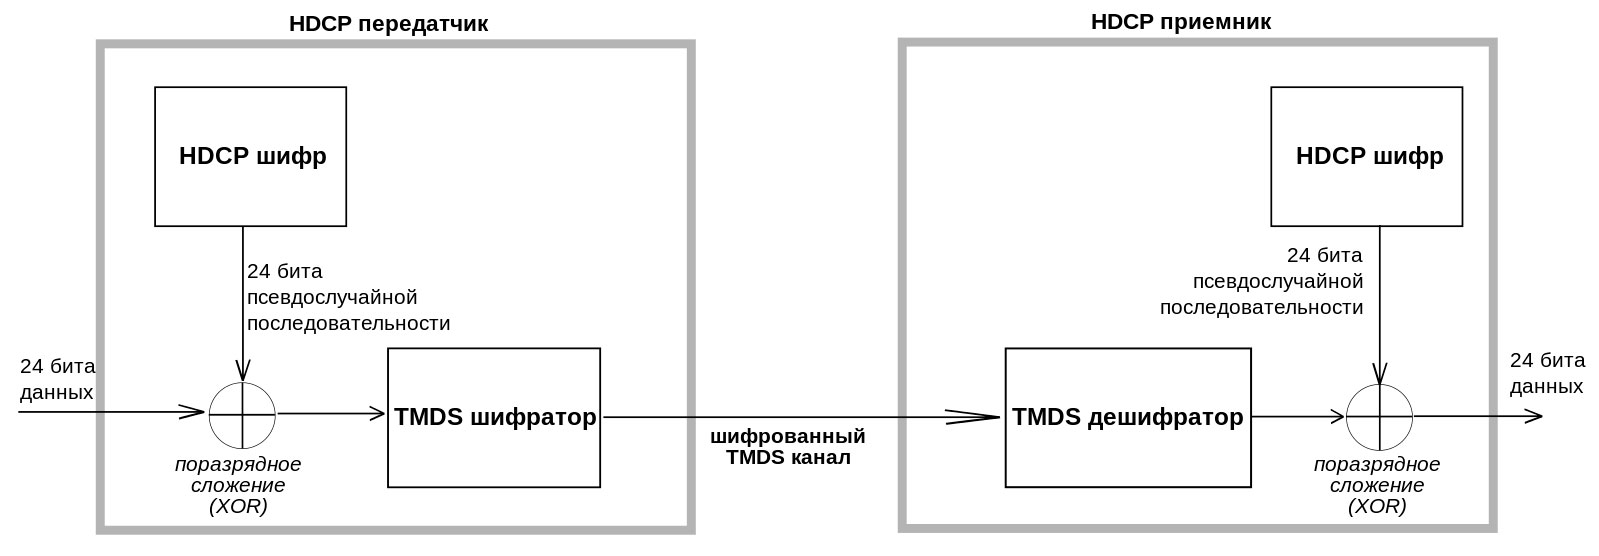 Схема шифрования устройства hdcp